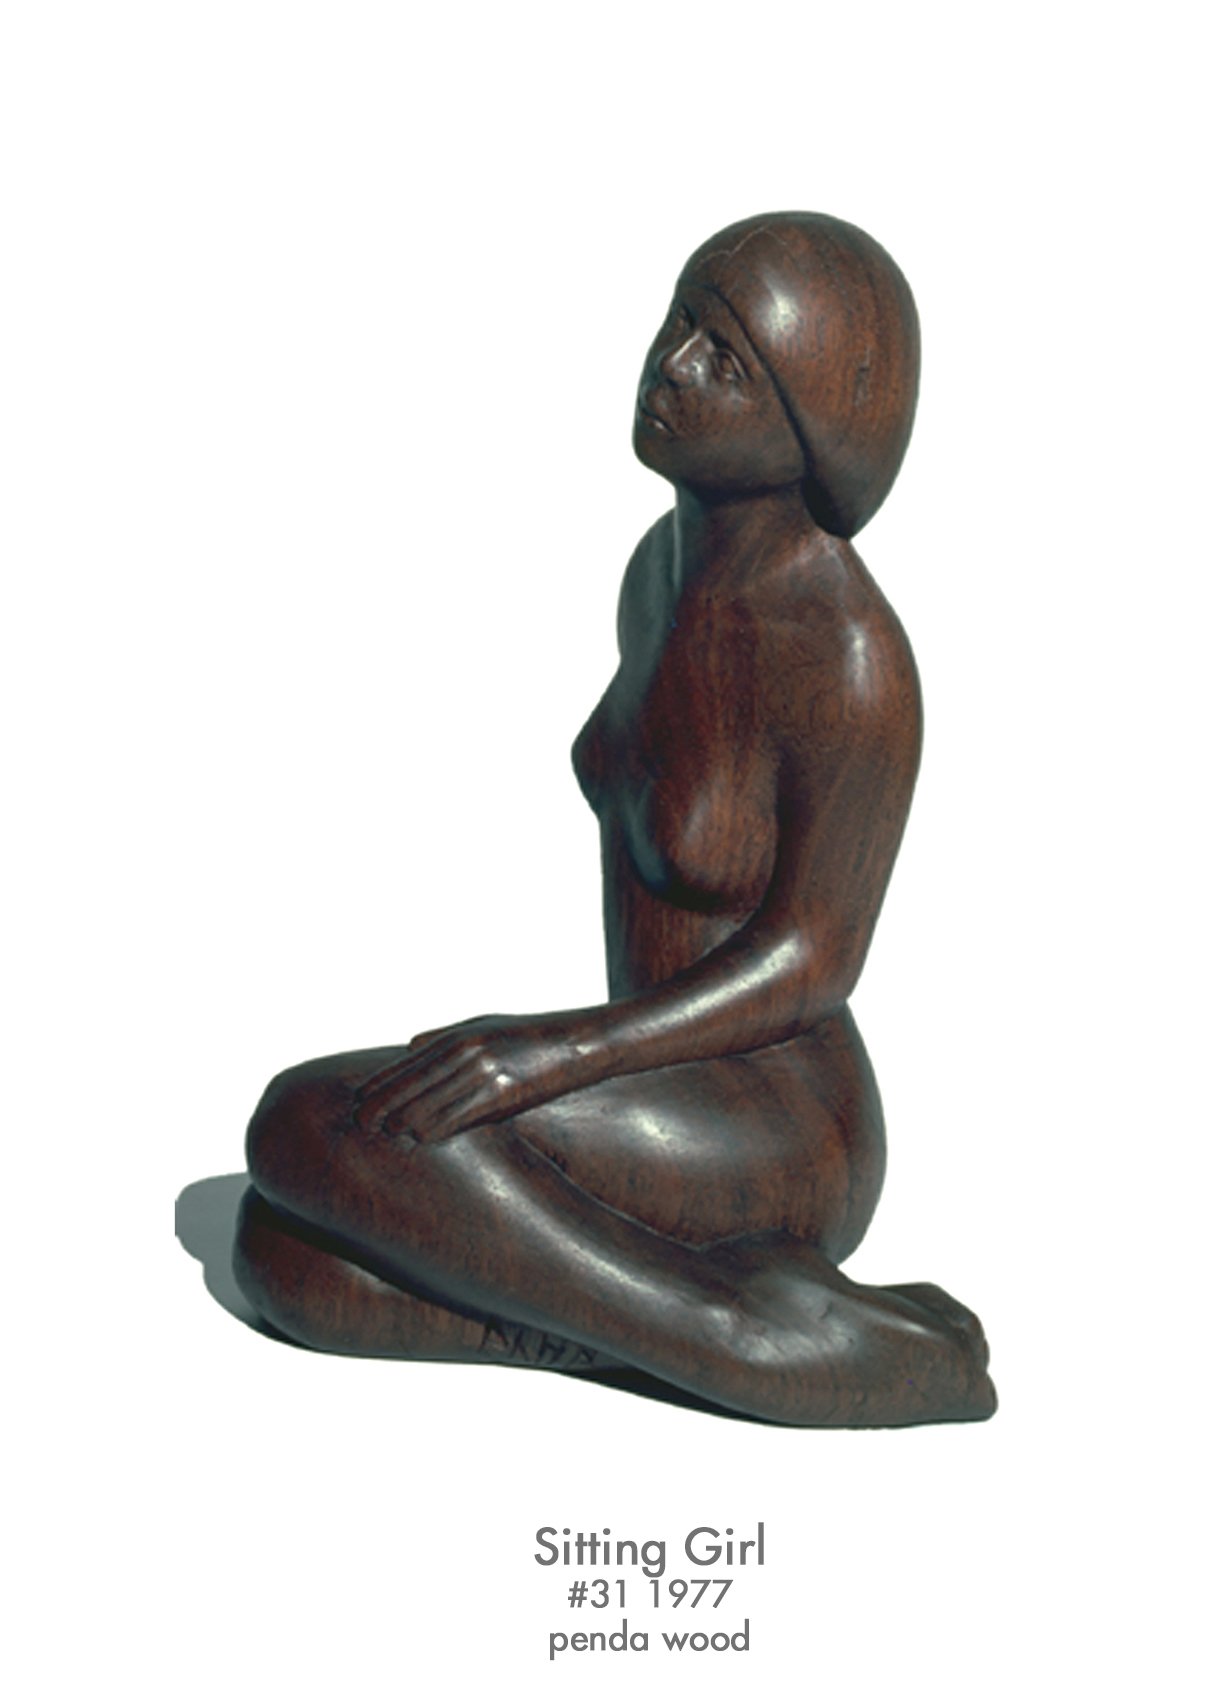 Sitting Girl, 1977, penda wood, #31